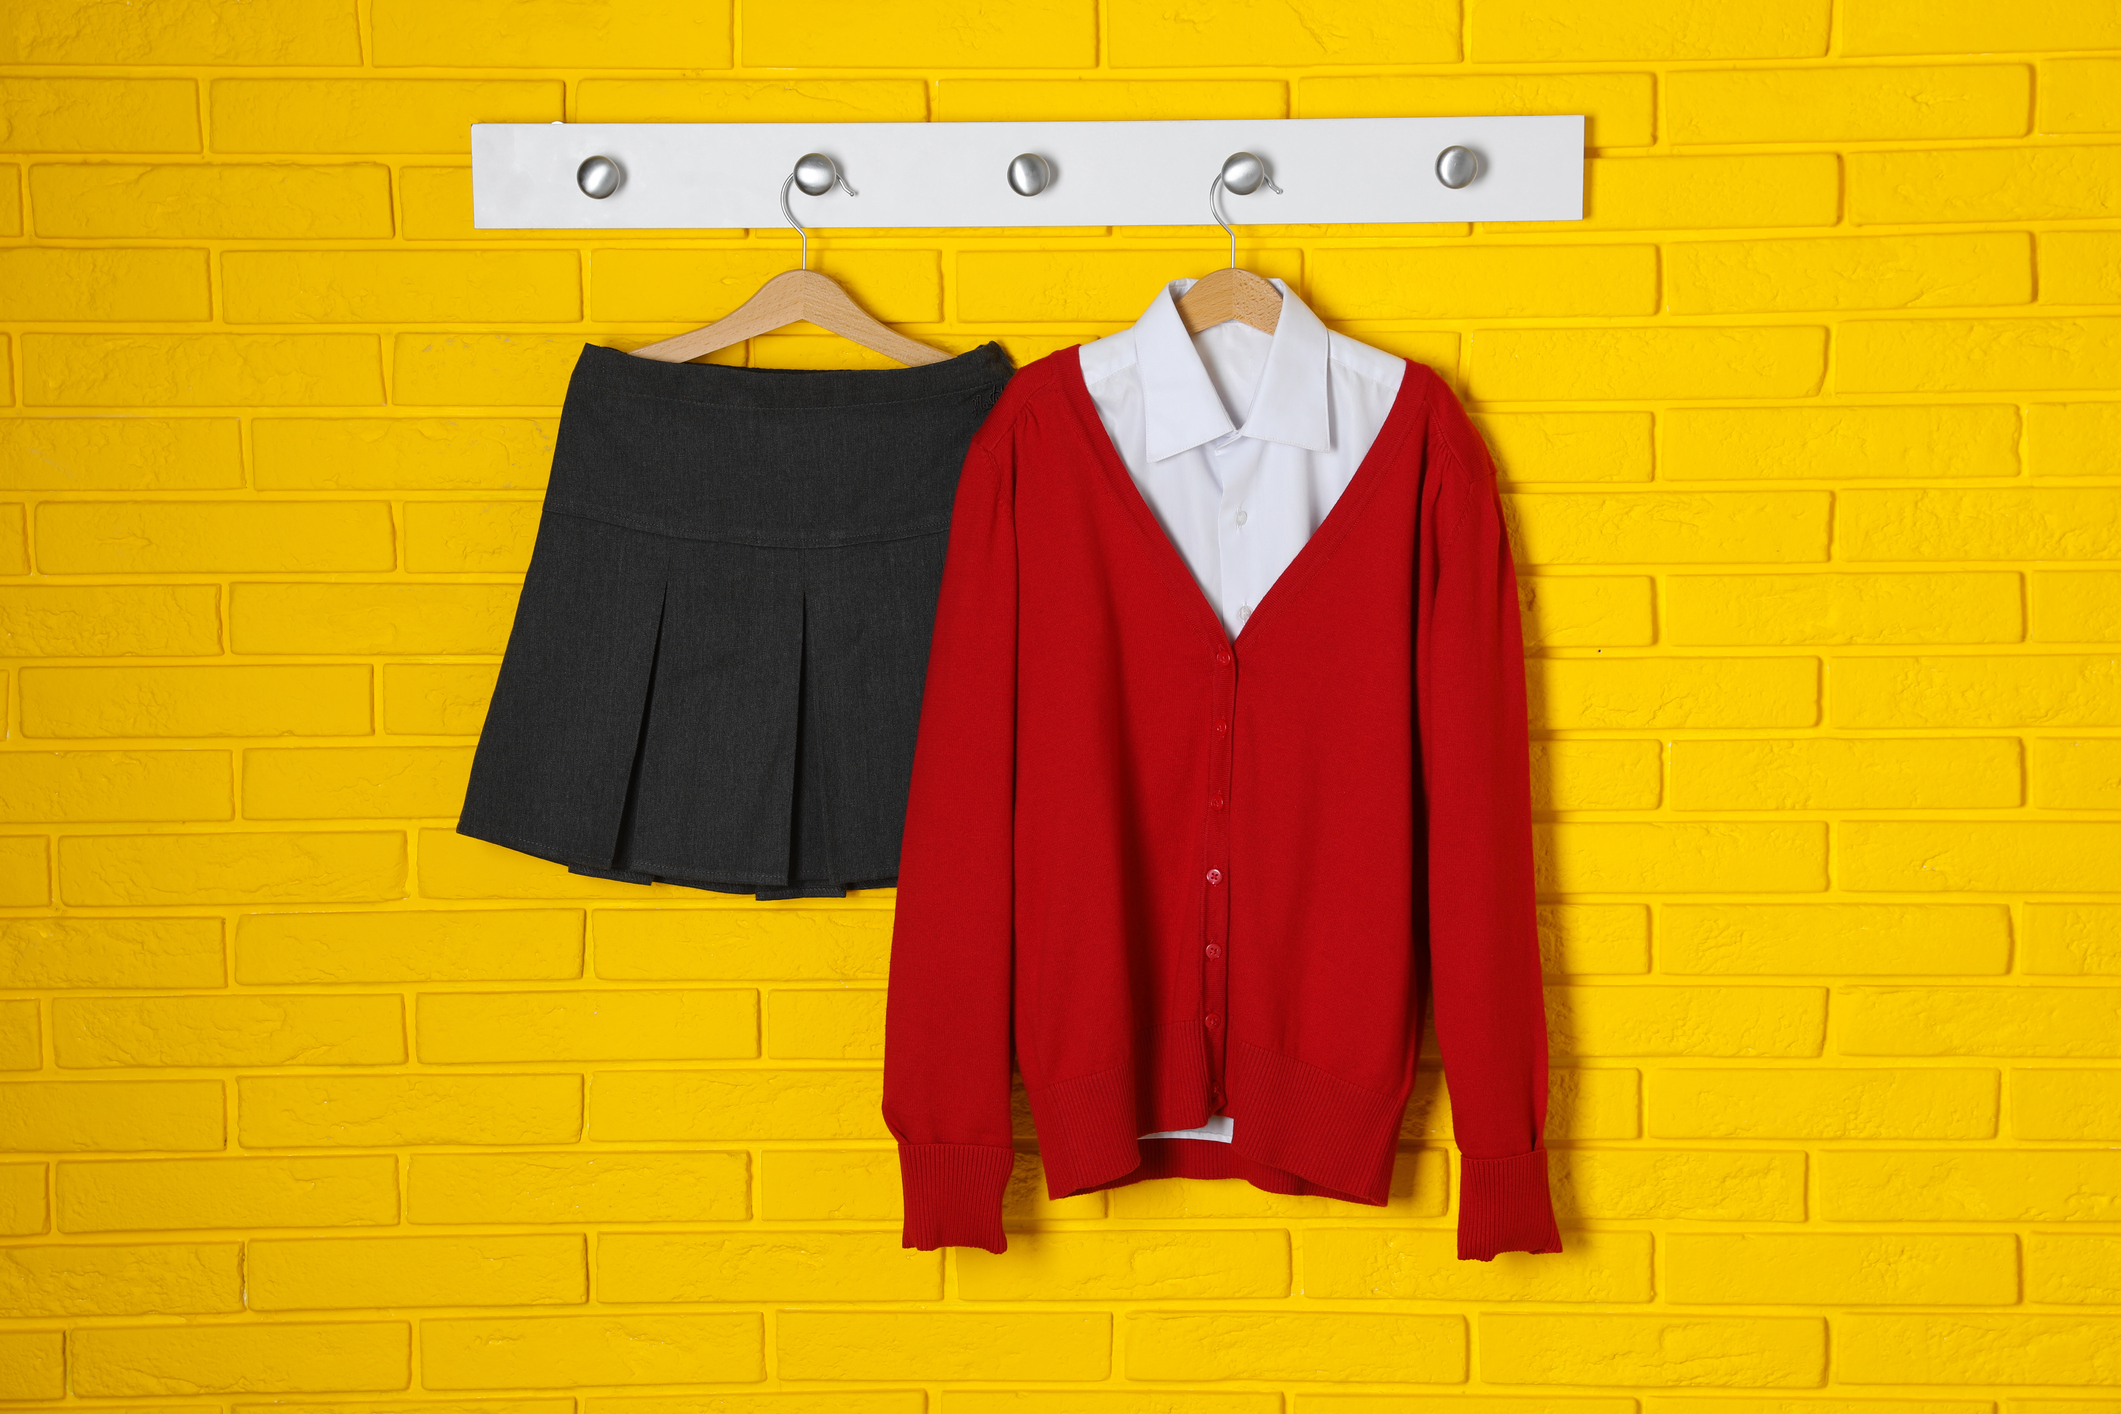 Study Shows School Uniforms Don't Improve Student Behavior